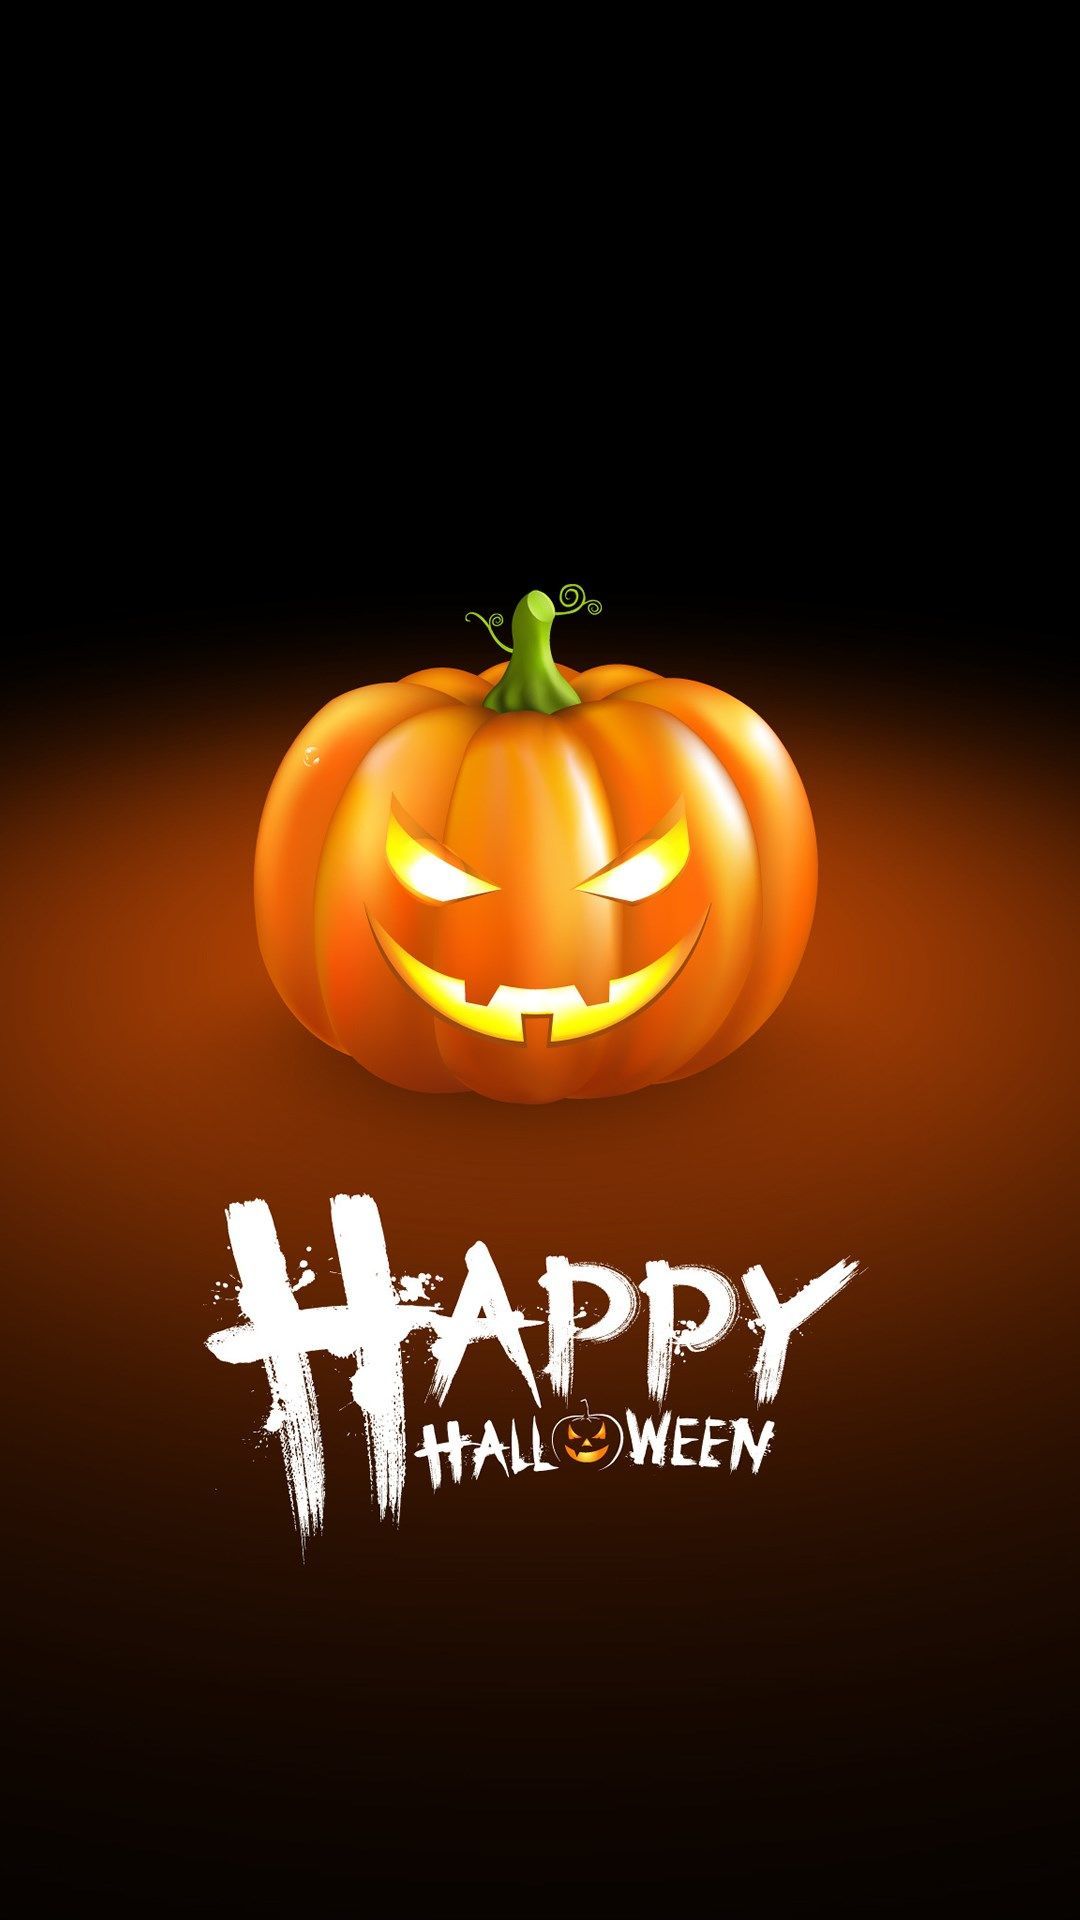 Happy Halloween to see more cute halloween wallpaper!. Halloween wallpaper, Halloween wallpaper iphone, Halloween pumpkins